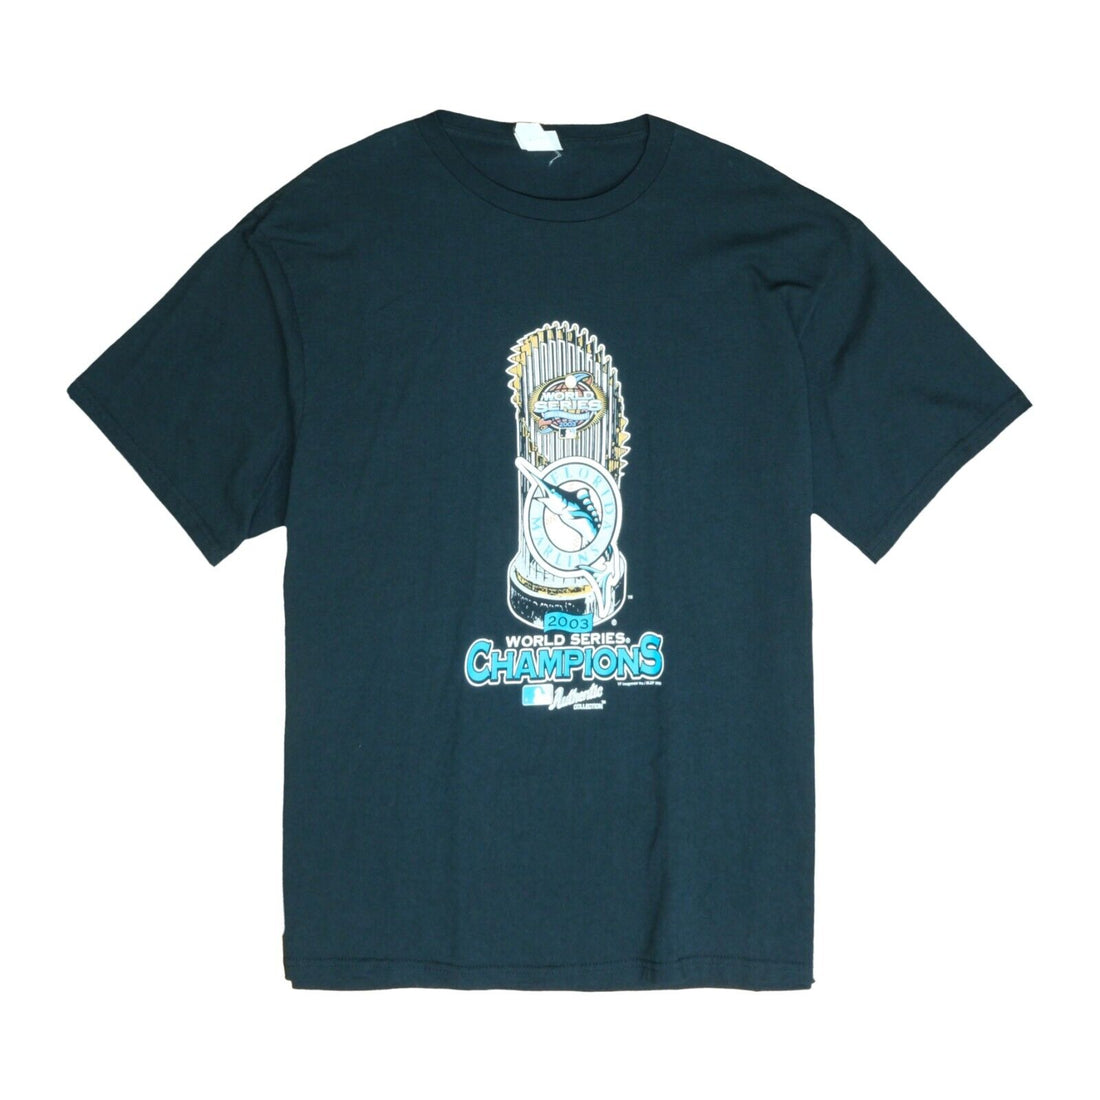 Vintage Florida Marlins World Series Champions Lee Sport T-Shirt XL 2003 MLB